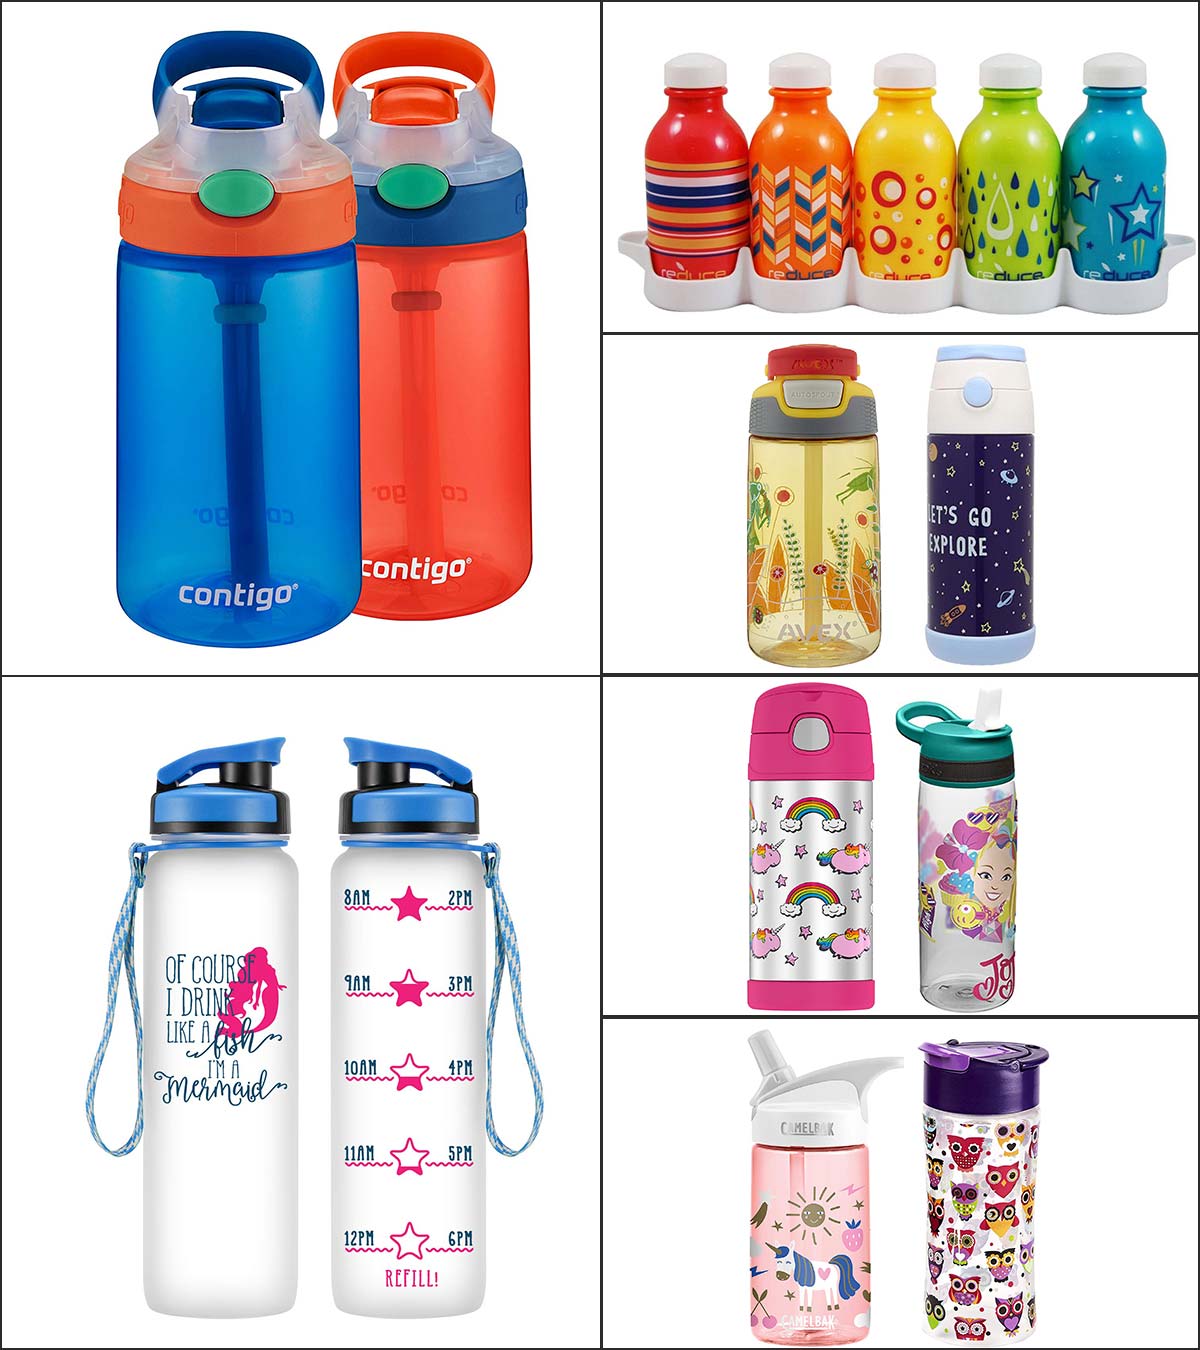 https://www.momjunction.com/wp-content/uploads/2019/08/11-Best-Water-bottles-To-Buy-for-kids-In-2019.jpg